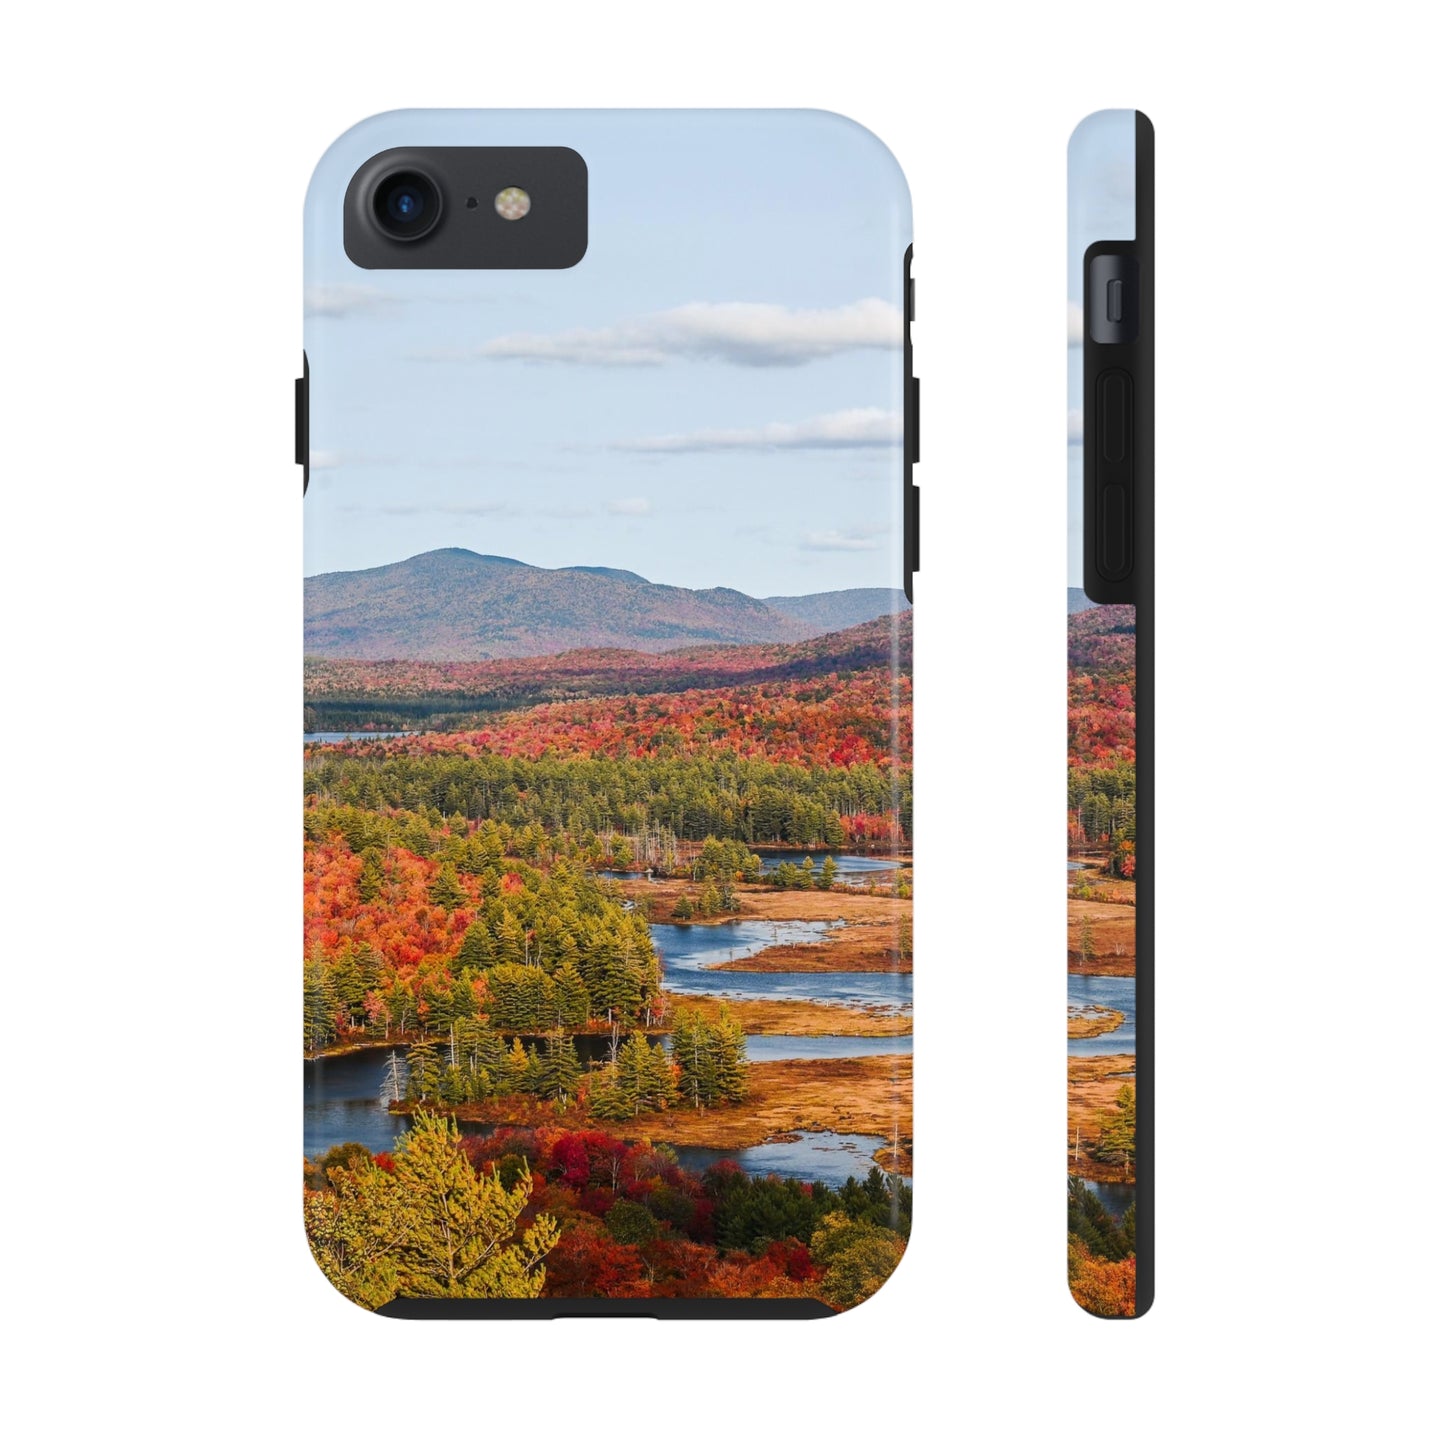 Impact Resistant Phone Case - Autumn Mountains & River